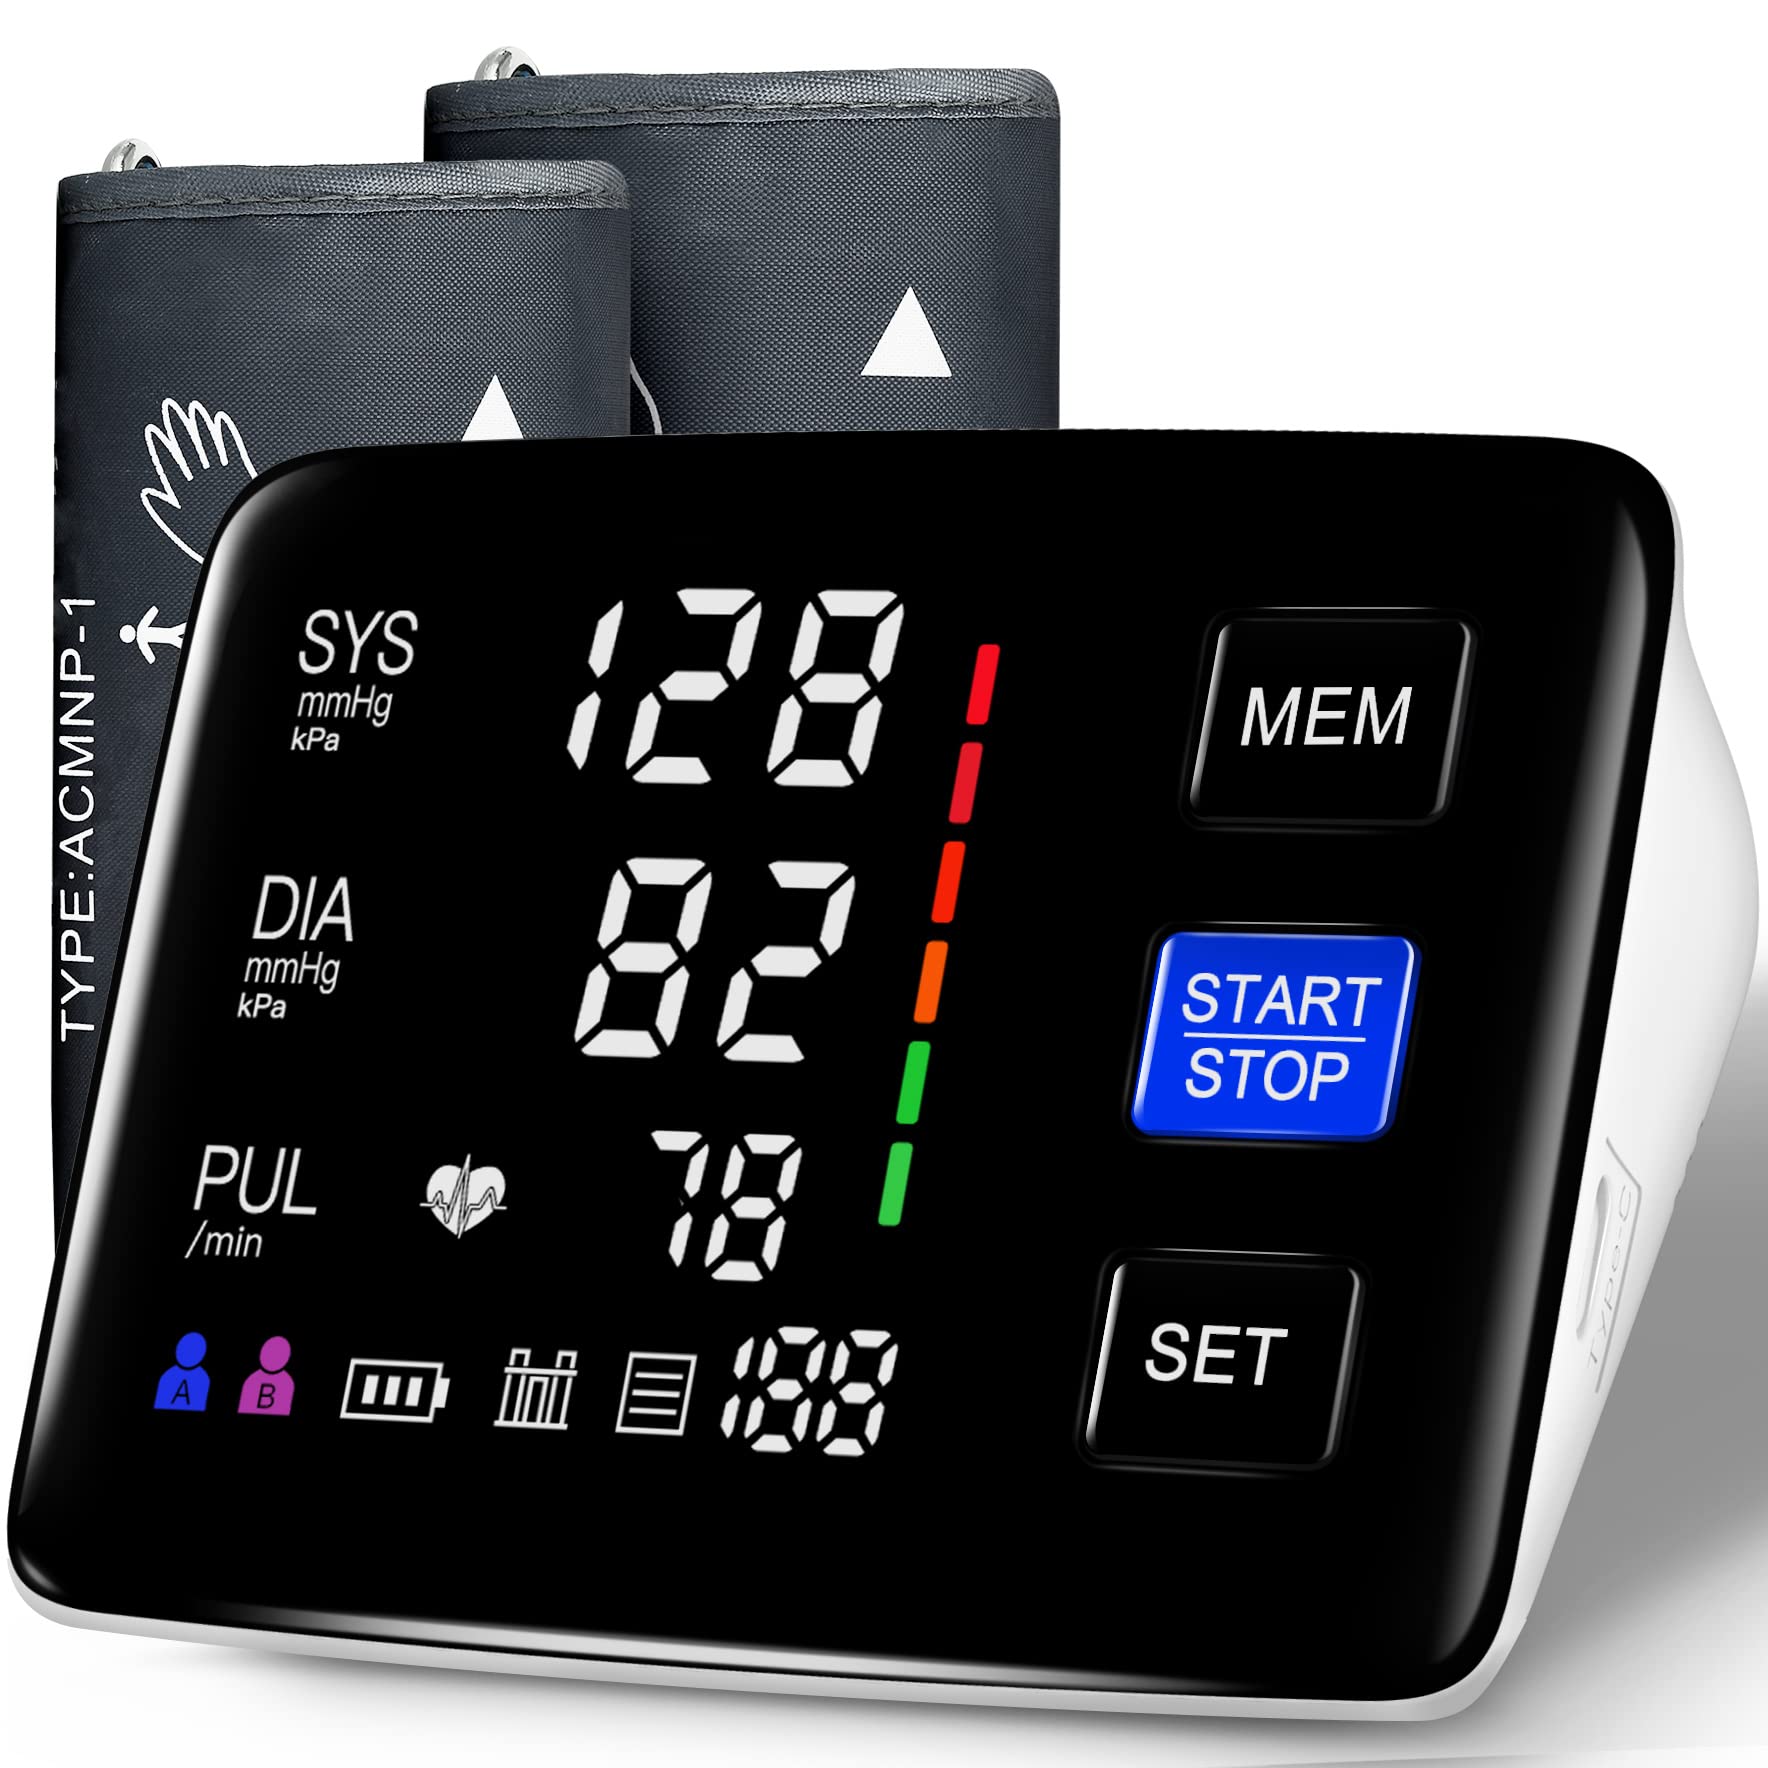 Blood Pressure Monitor, 9-17'' & 13-21'' Extra Large Blood Pressure Cuff  Upper